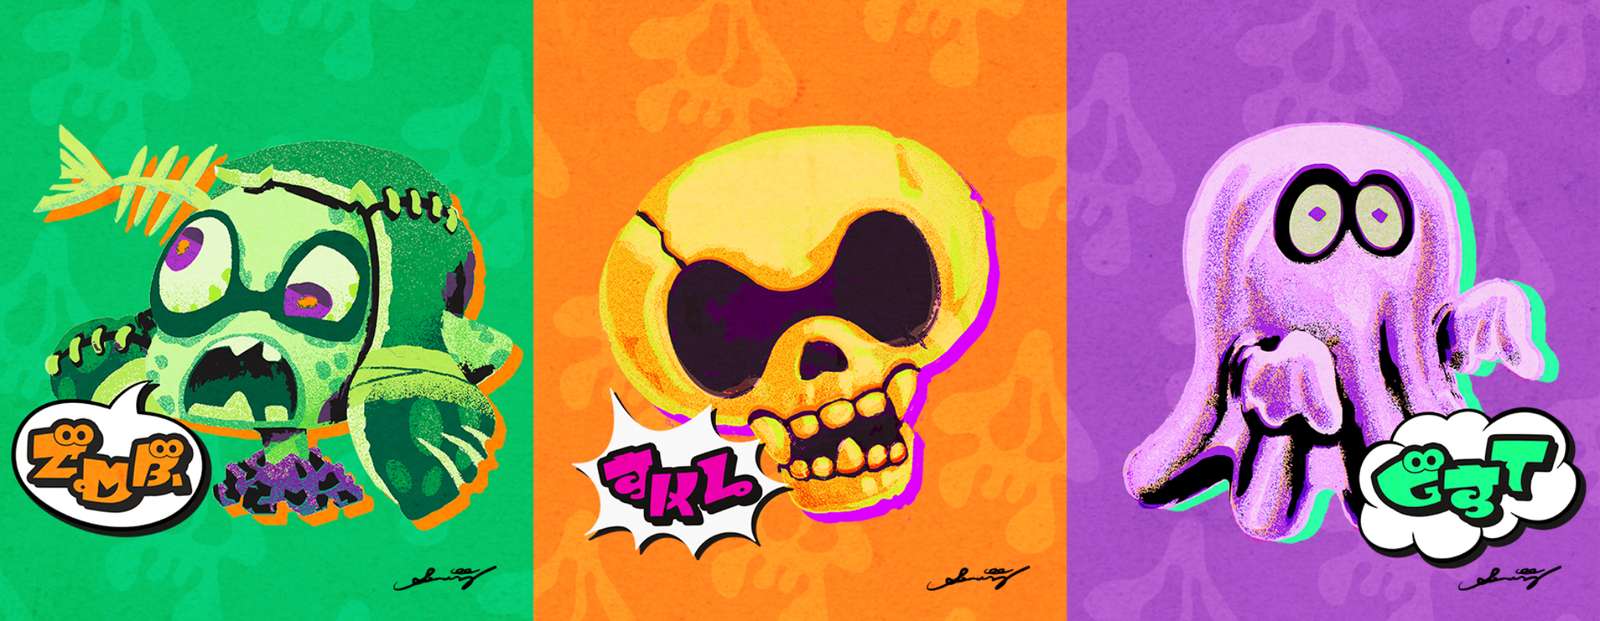 Zumbi vs. Esqueleto vs. Fantasma puzzle online